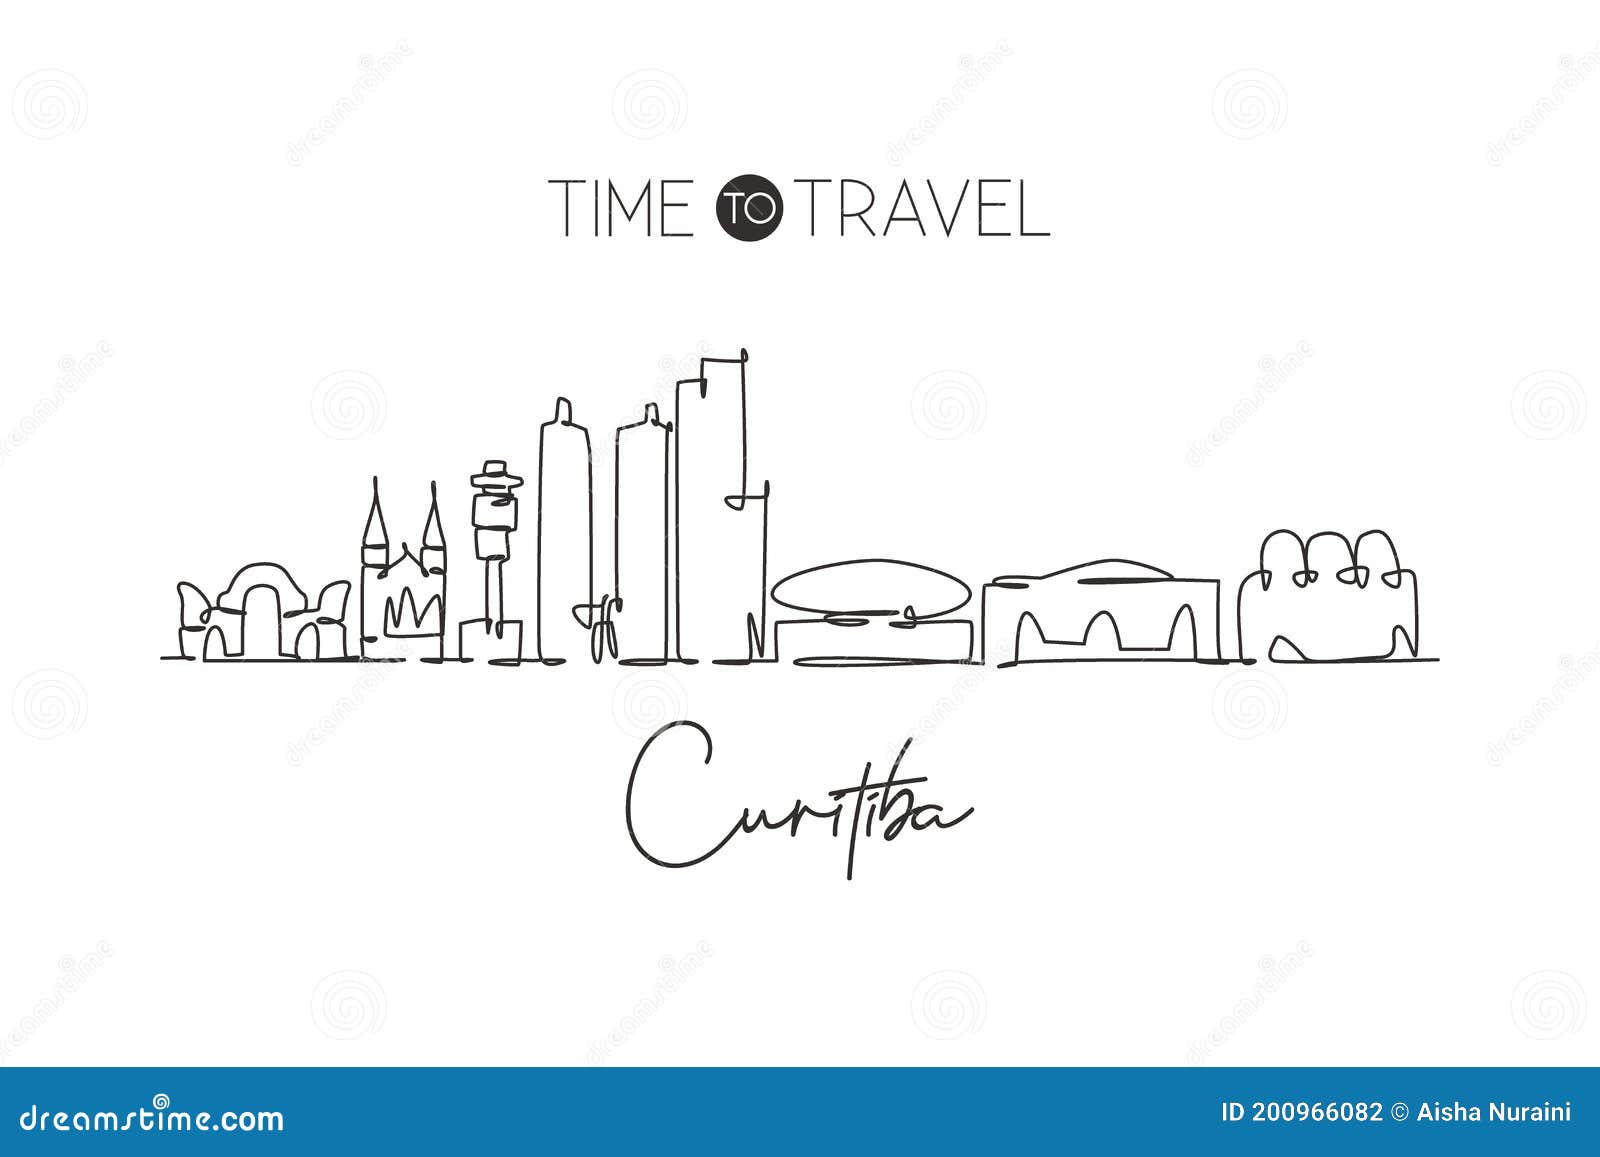 one continuous line drawing curitiba city skyline, brazil. beautiful landmark postcard. world landscape tourism and travel